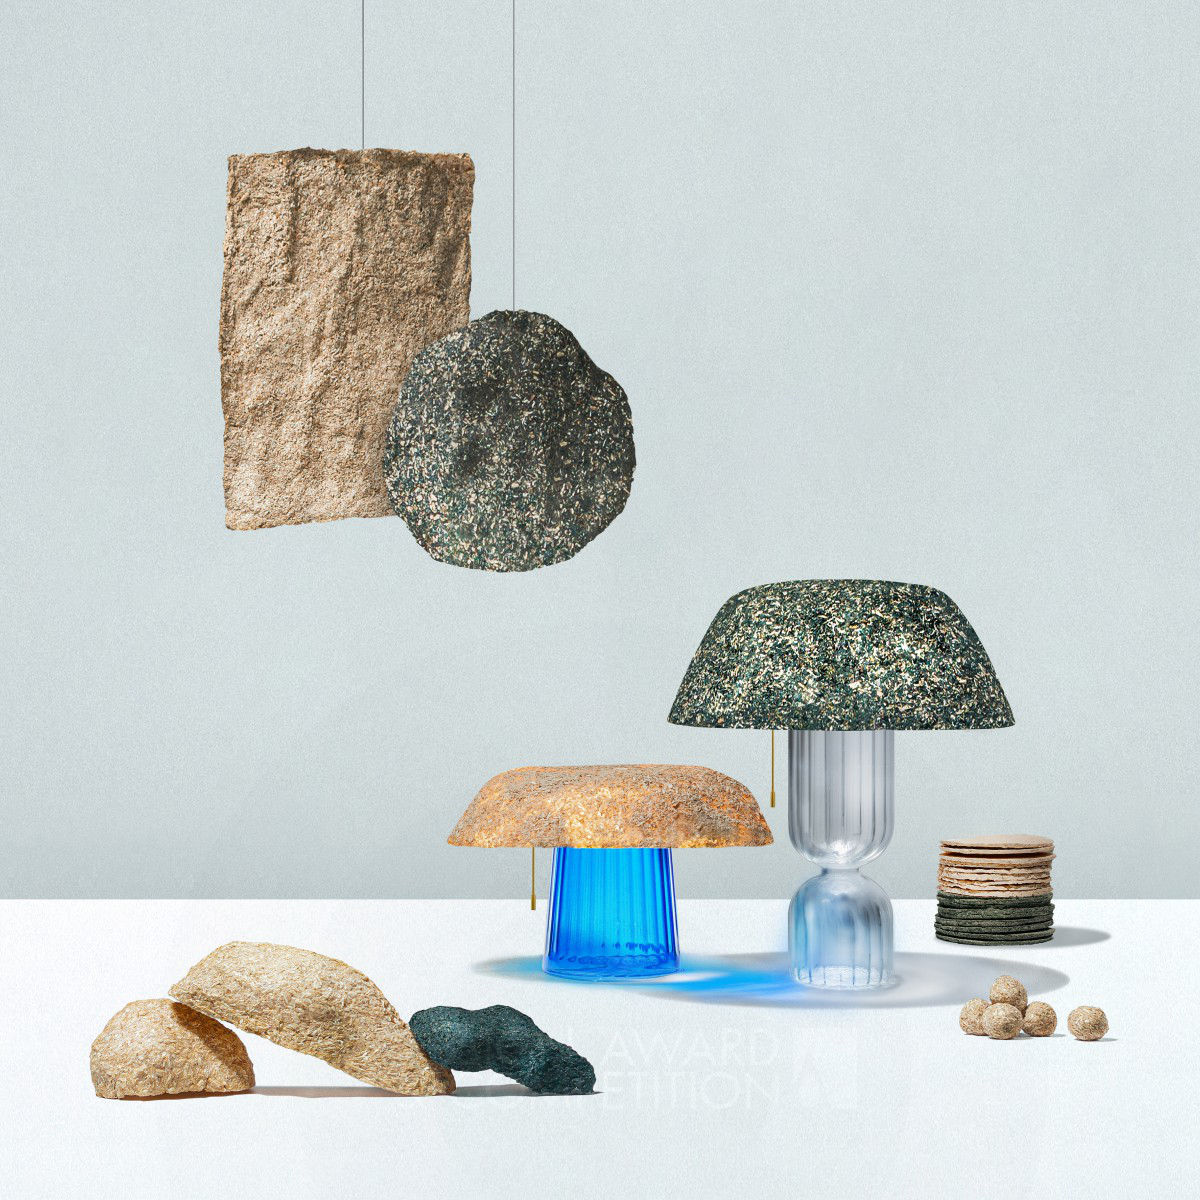 Bonyeon Biodegradable Material by Jooen Lee